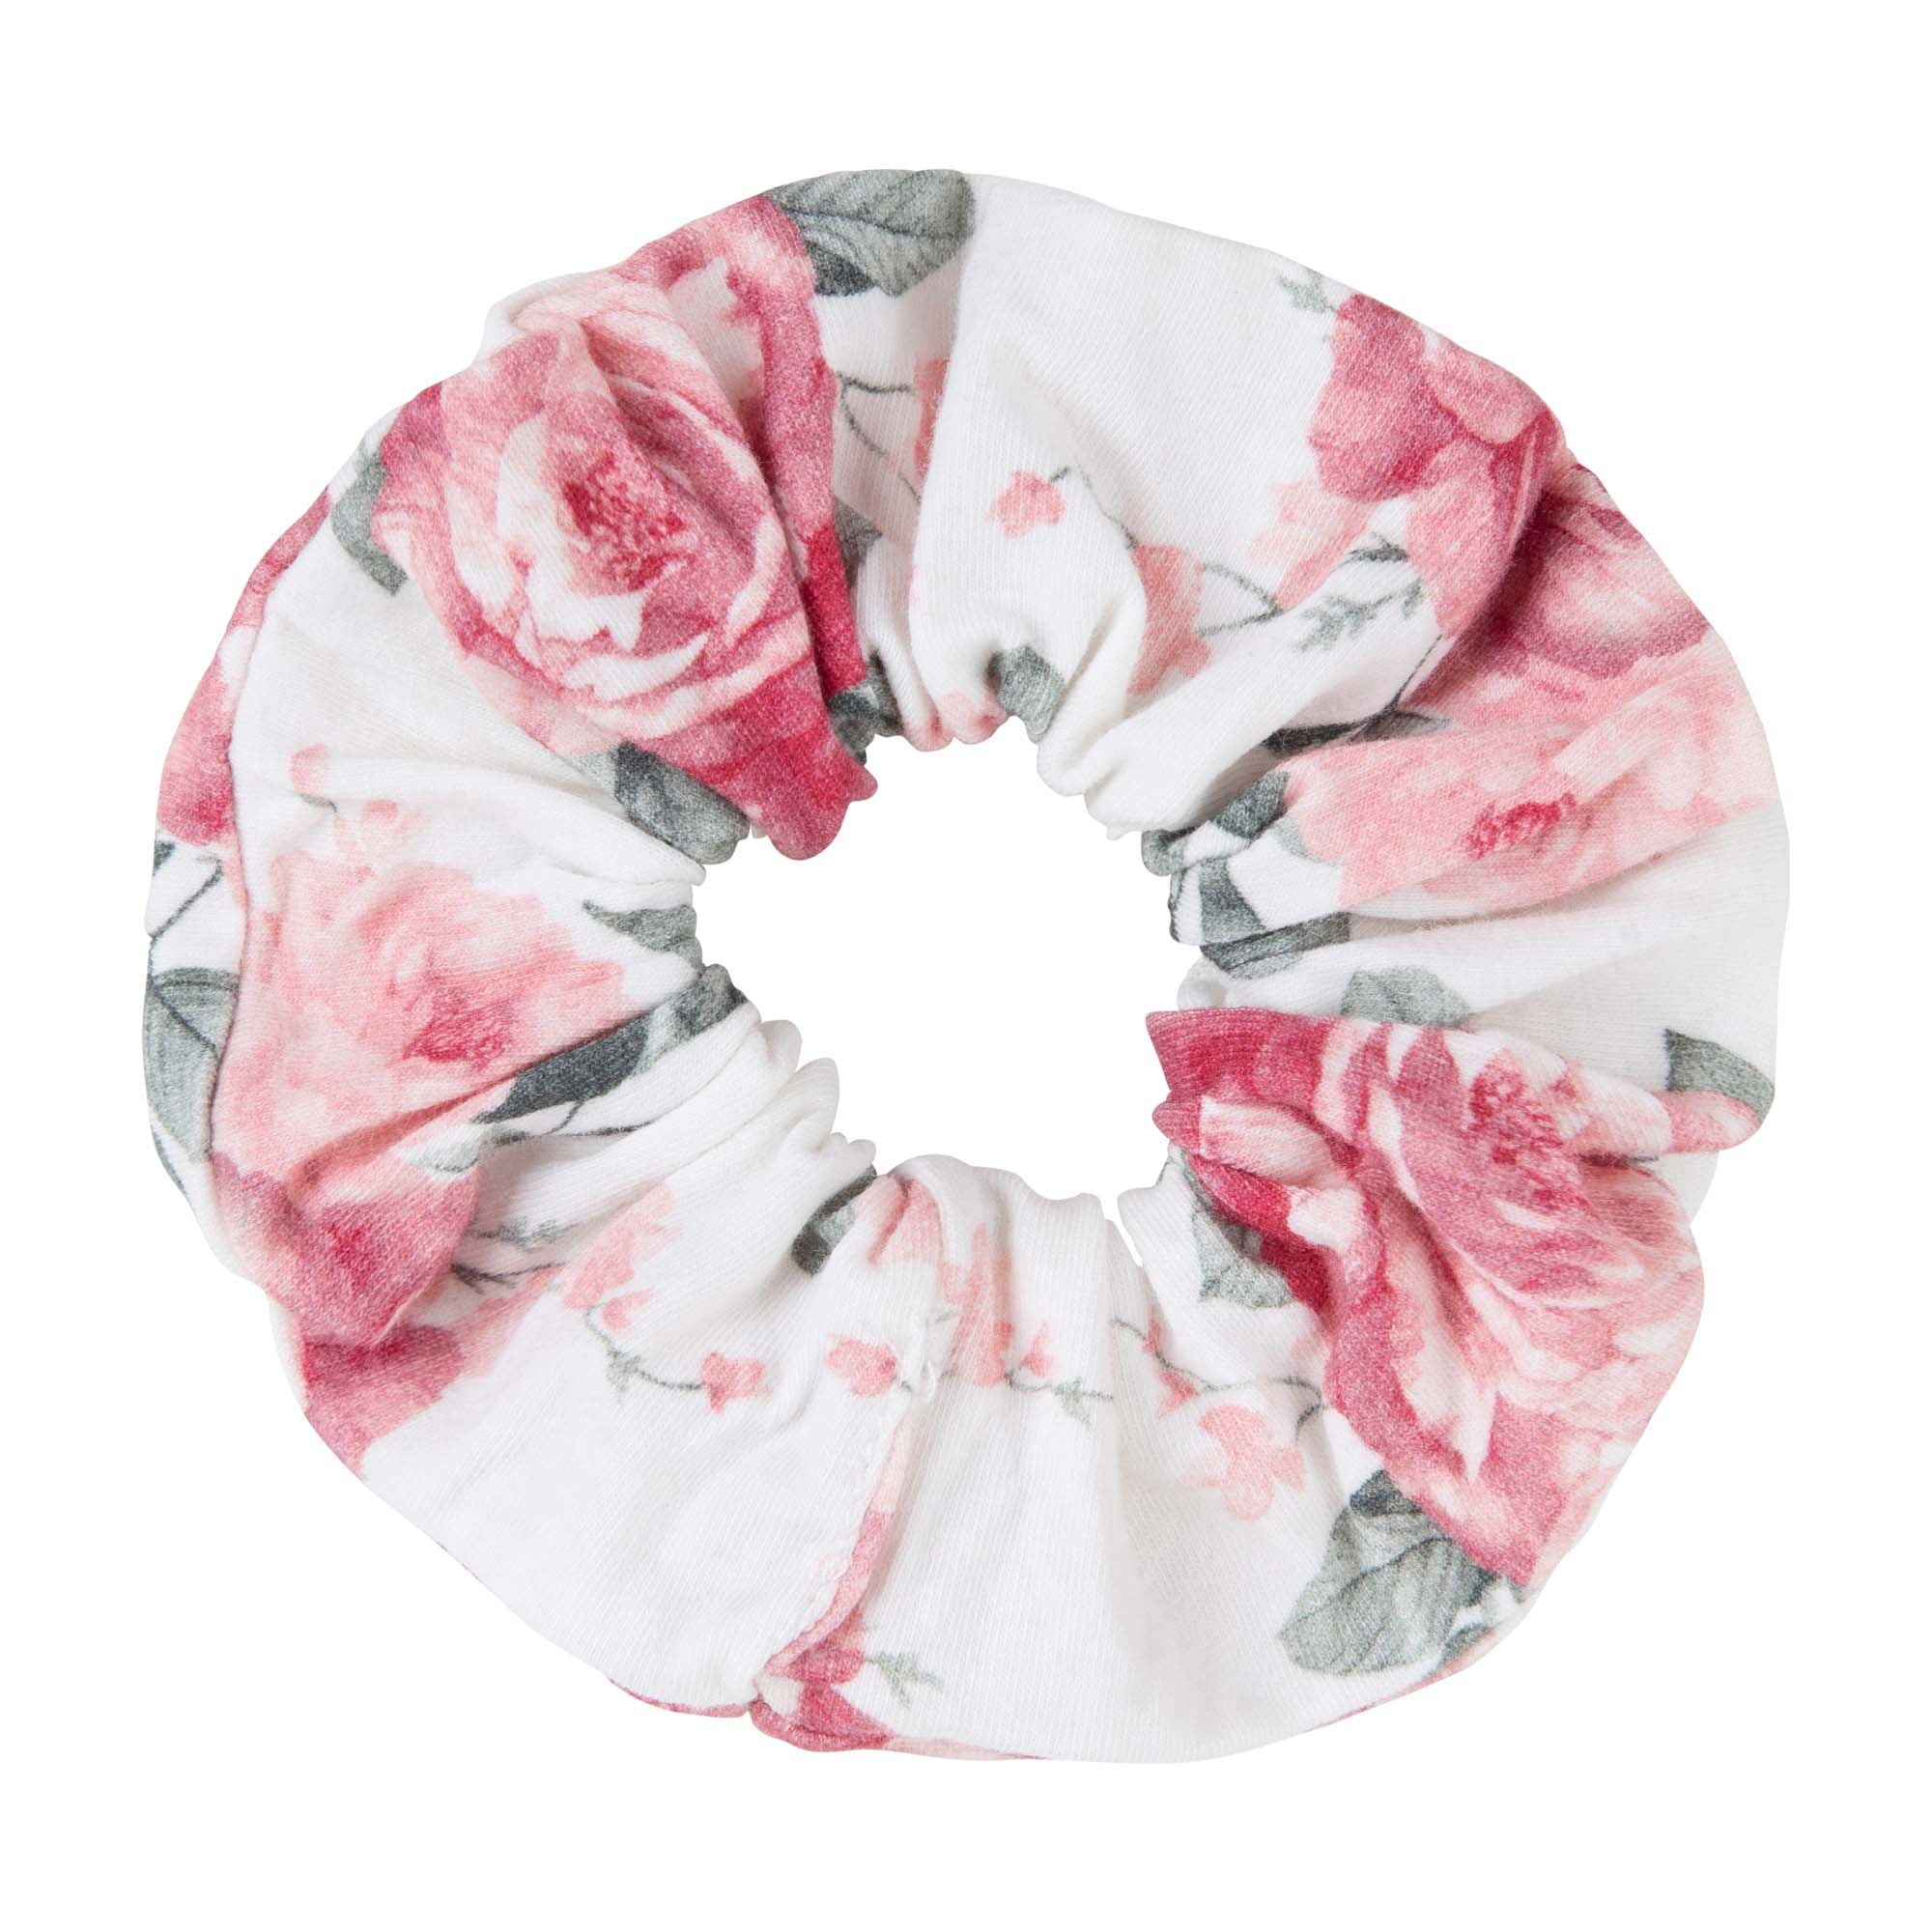 Designer Kidz Accessory Hair Belle Floral Scrunchie - Tea Rose